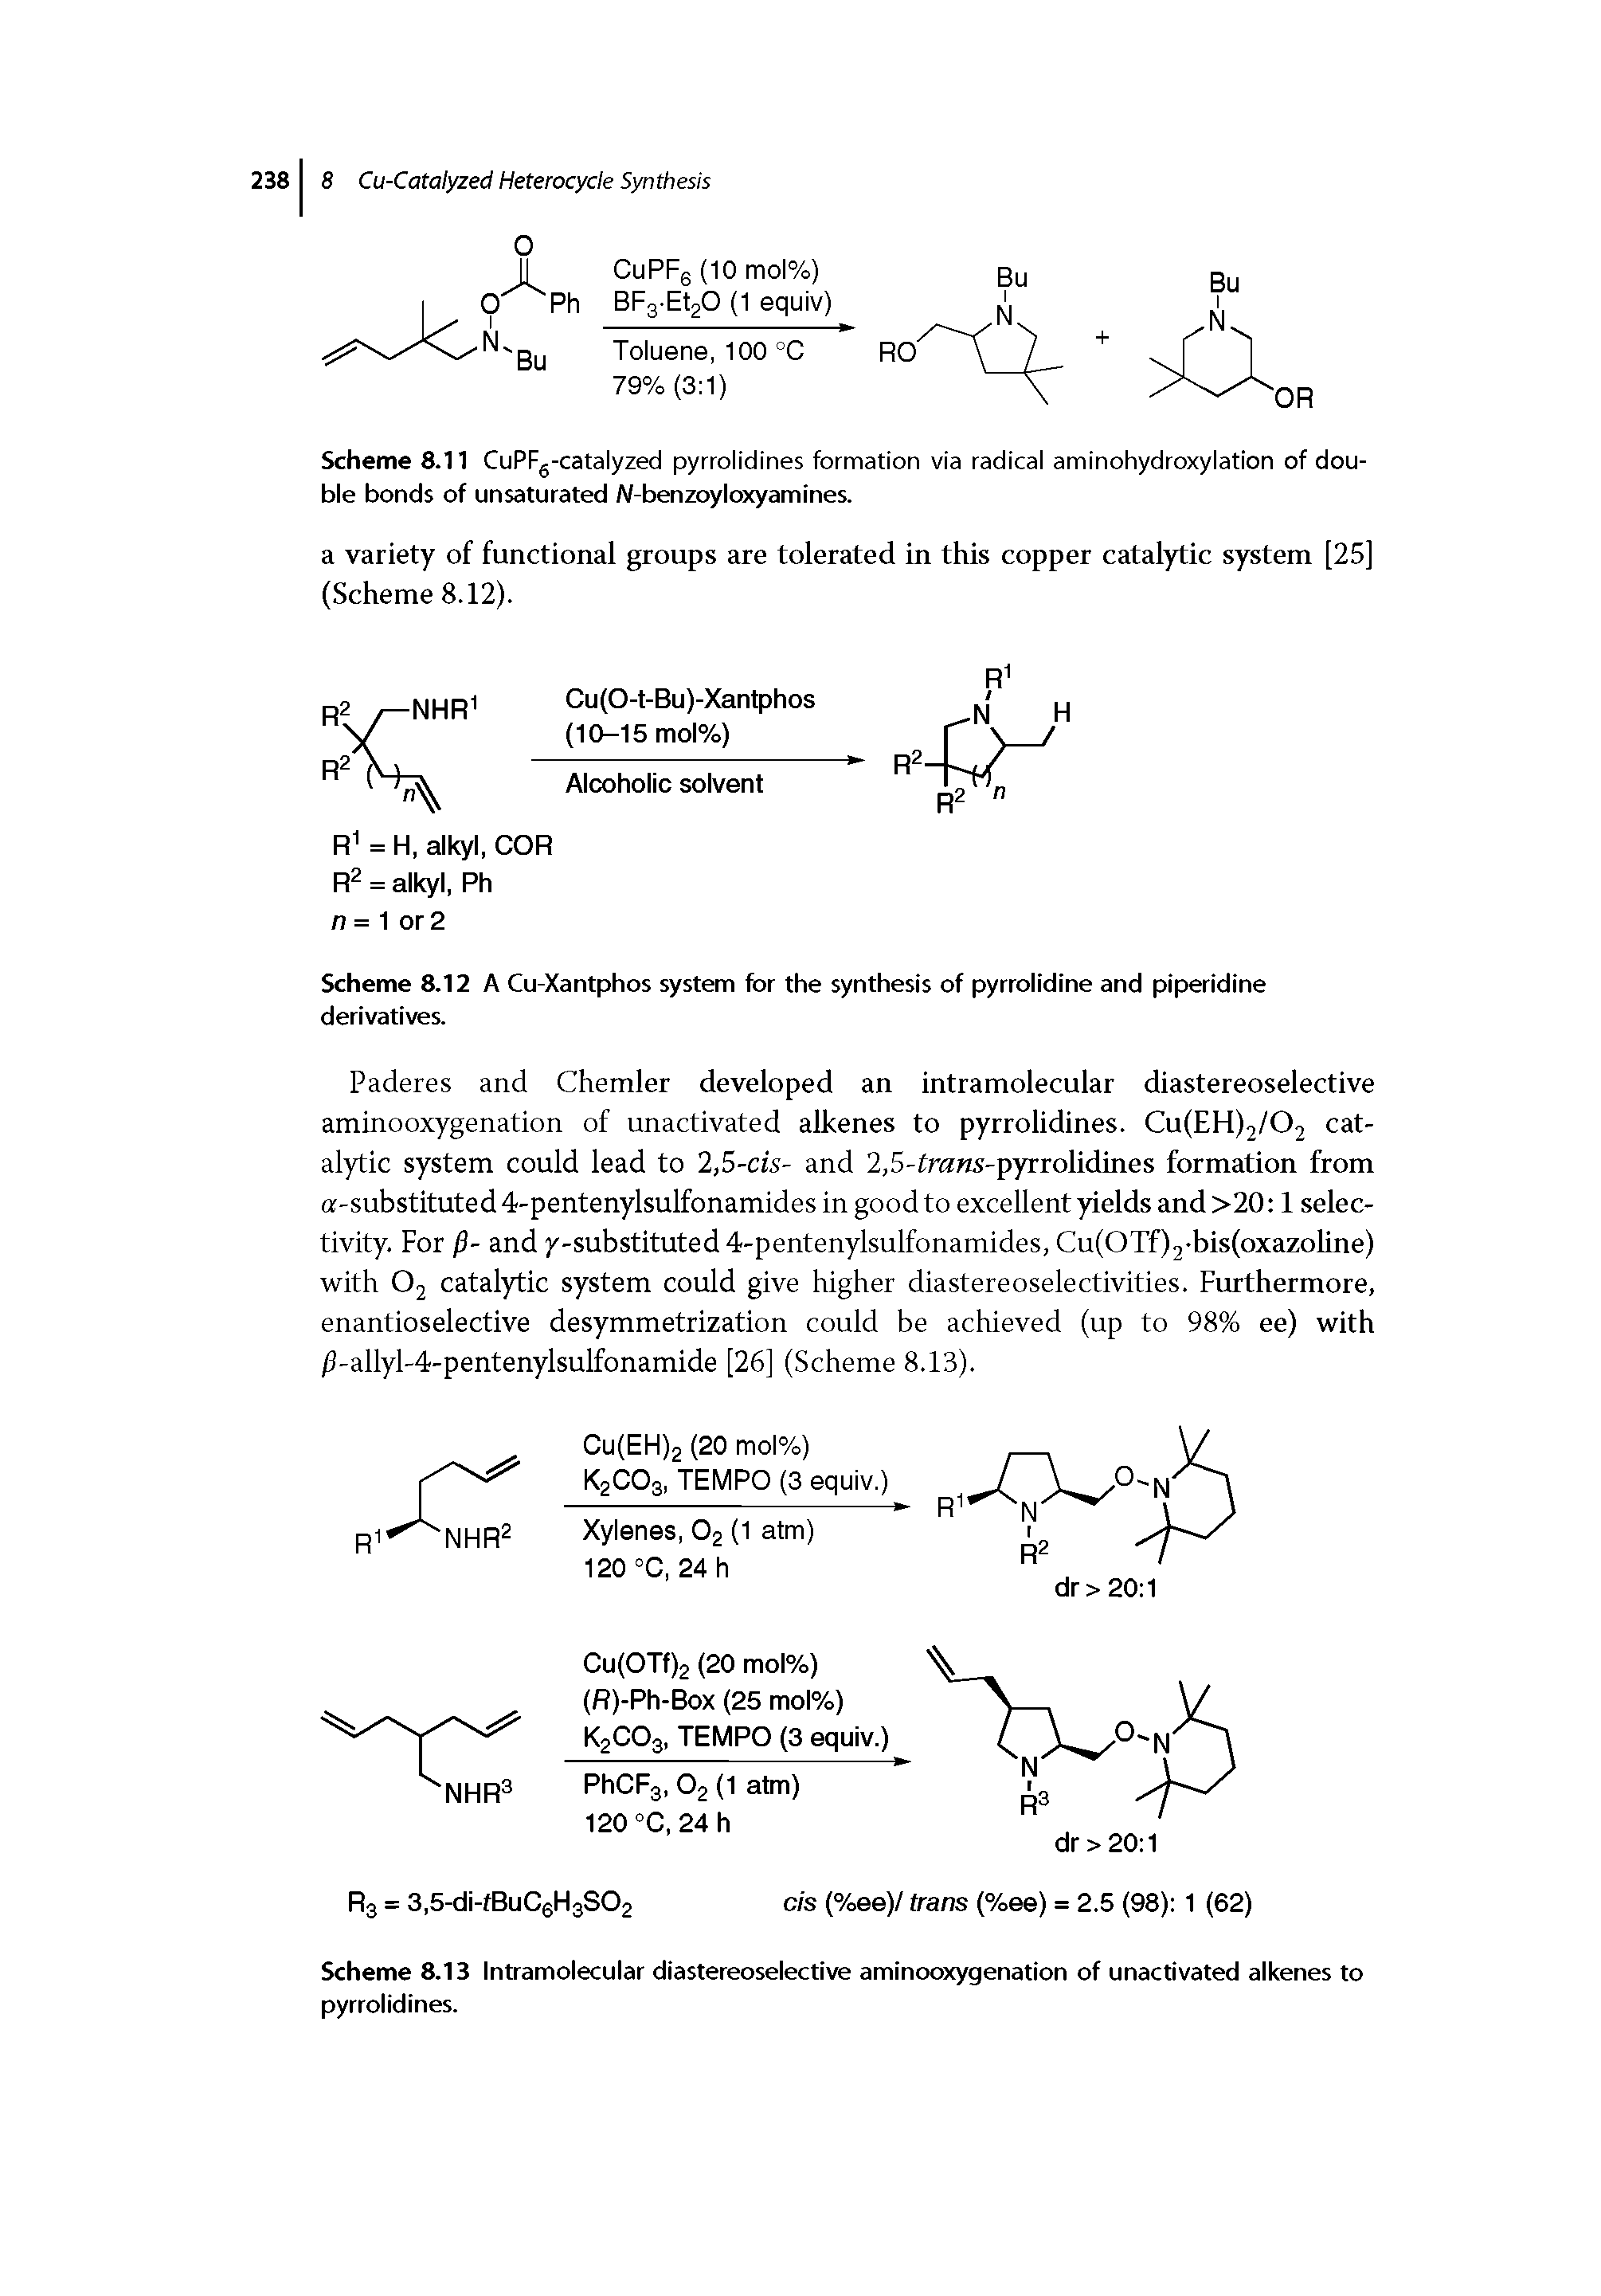 Scheme 8.11 CuPFg-catalyzed pyrrolidines formation via radical aminohydroxylation of double bonds of unsaturated N-benzoyloxyamines.